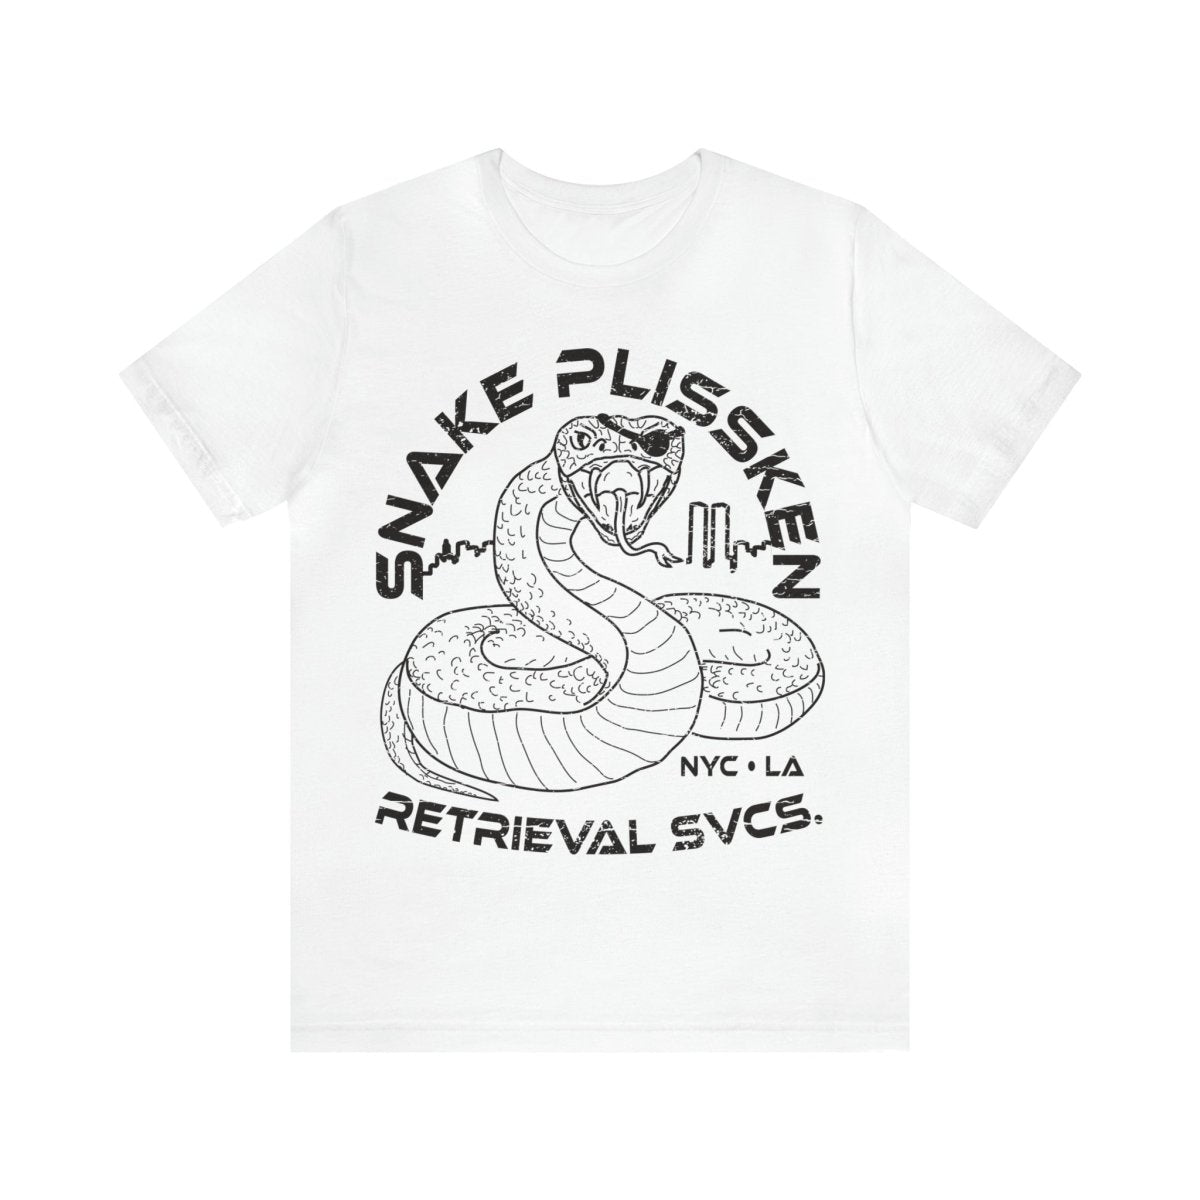 Snake Plissken Premium T-Shirt, Retrieval Services, NYC, LA